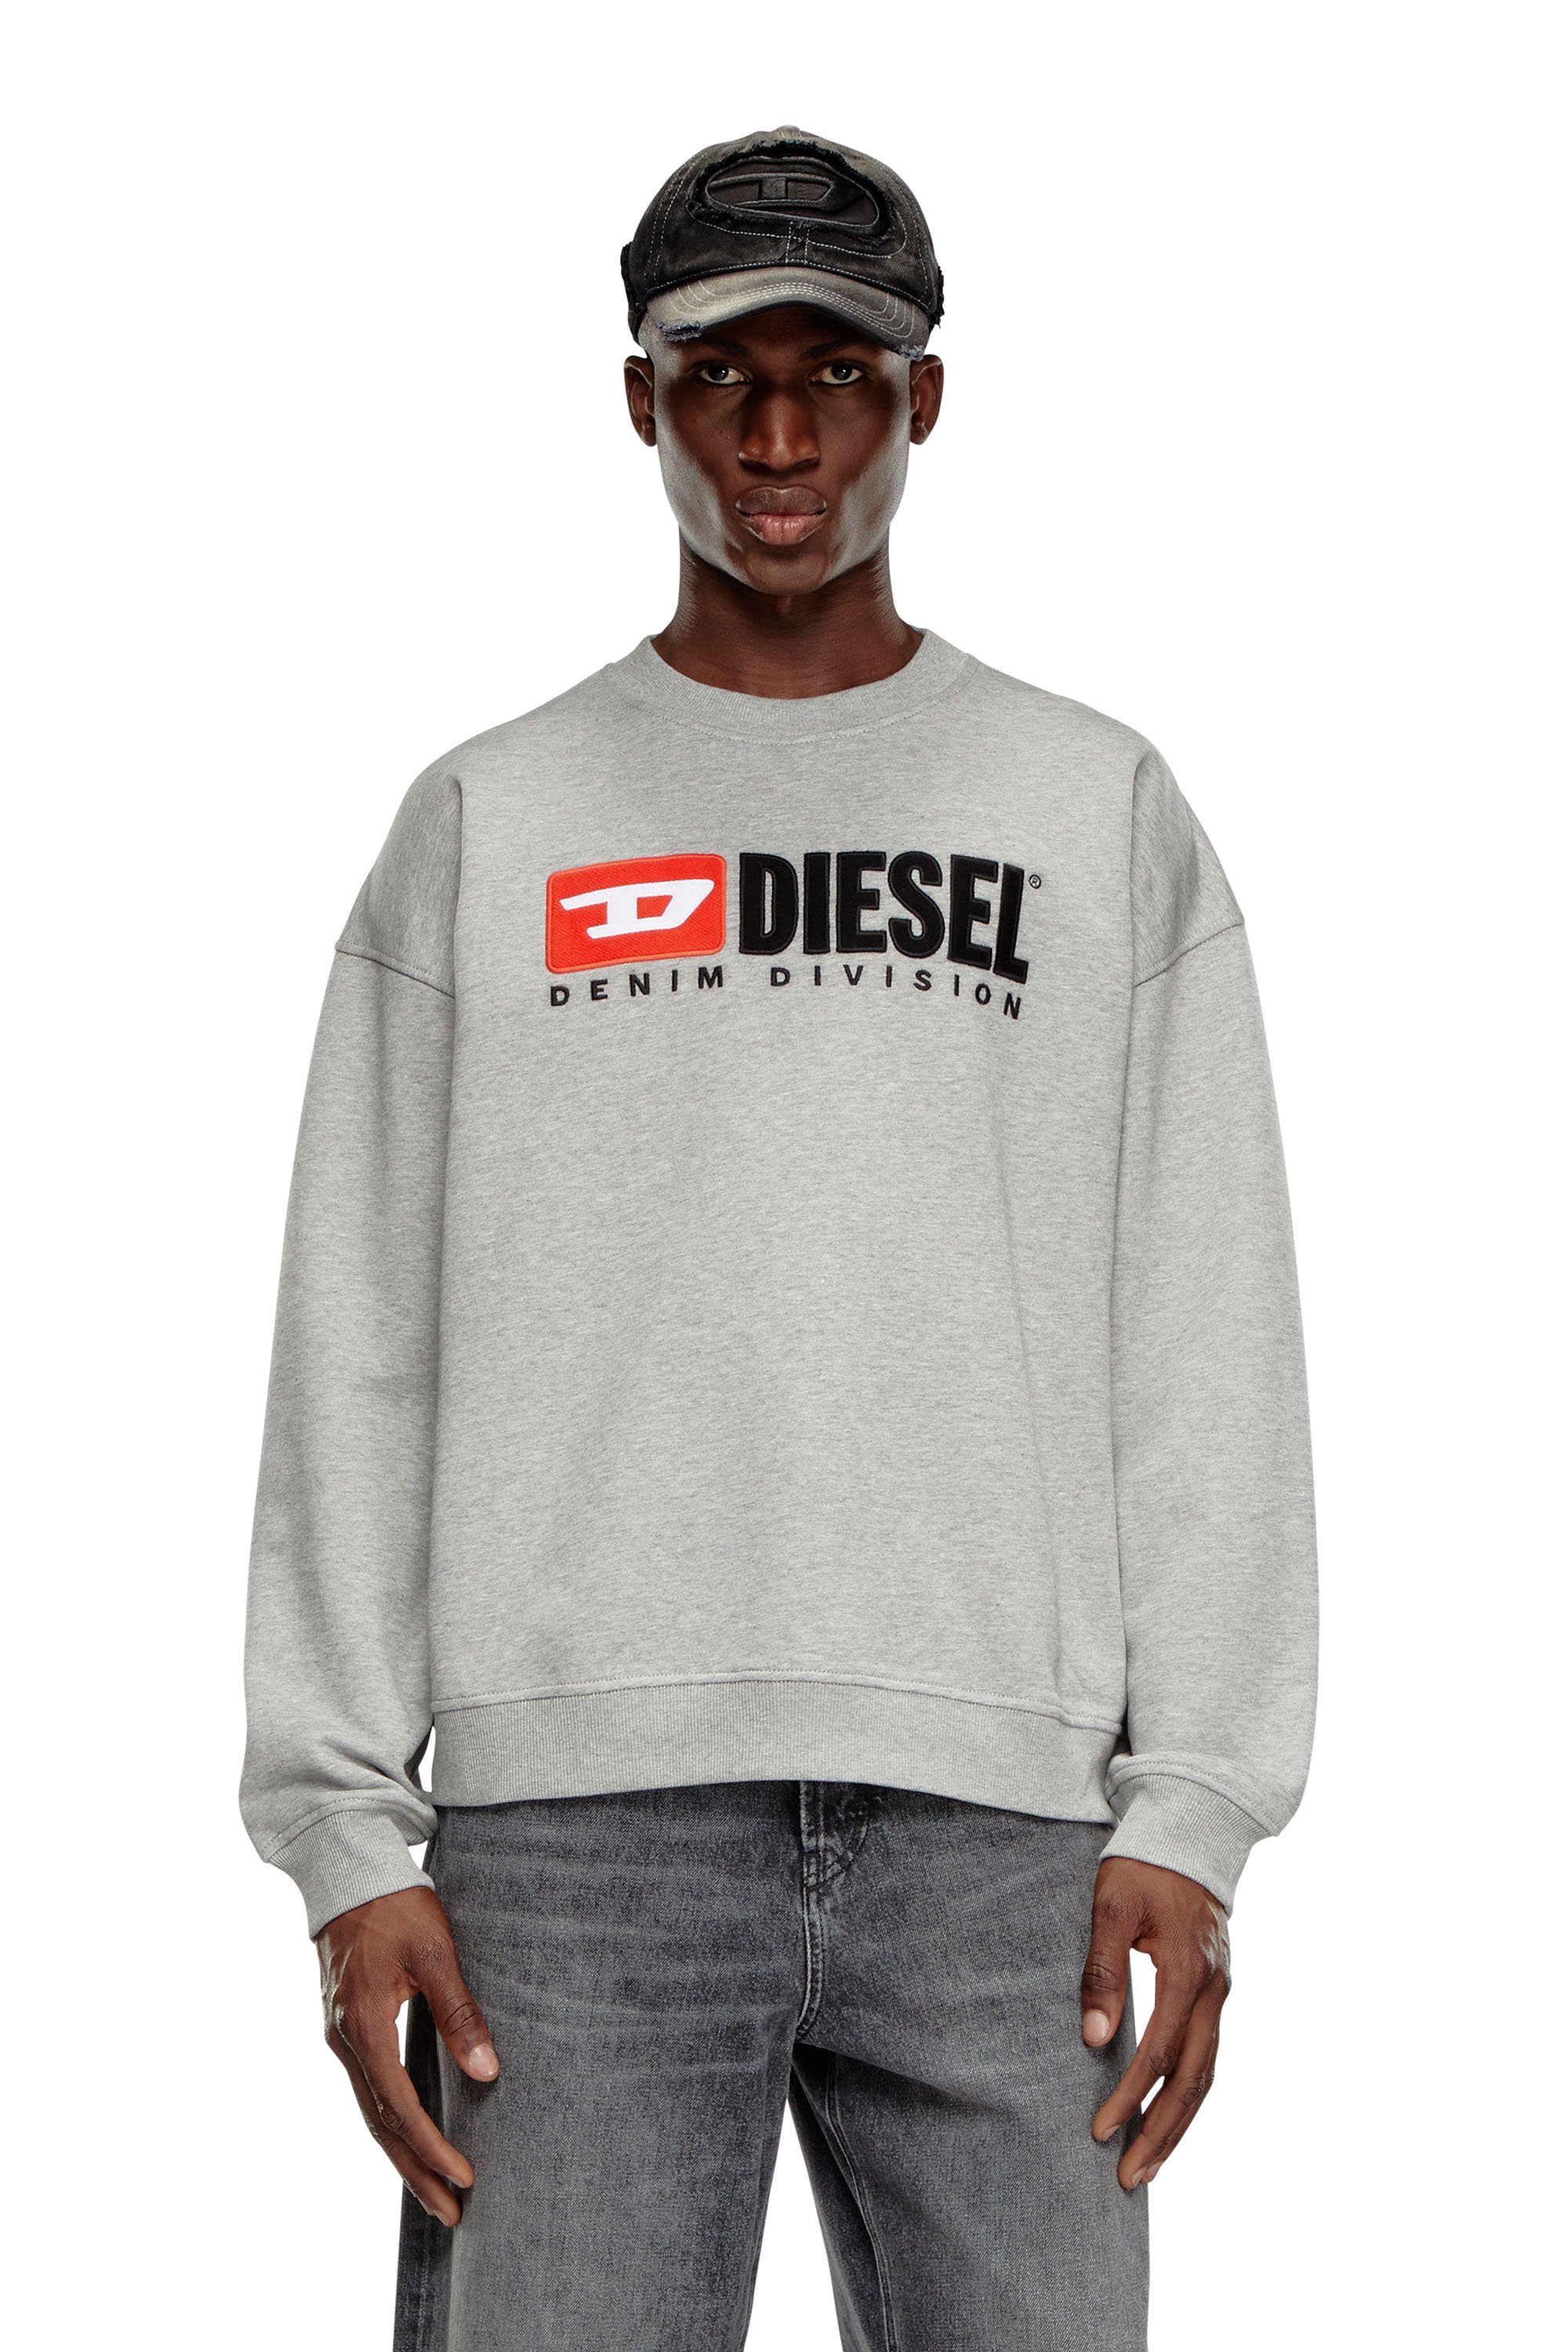 Diesel - S-BOXT-DIV, Homme Sweat-shirt avec logo Denim Division in Gris - Image 1